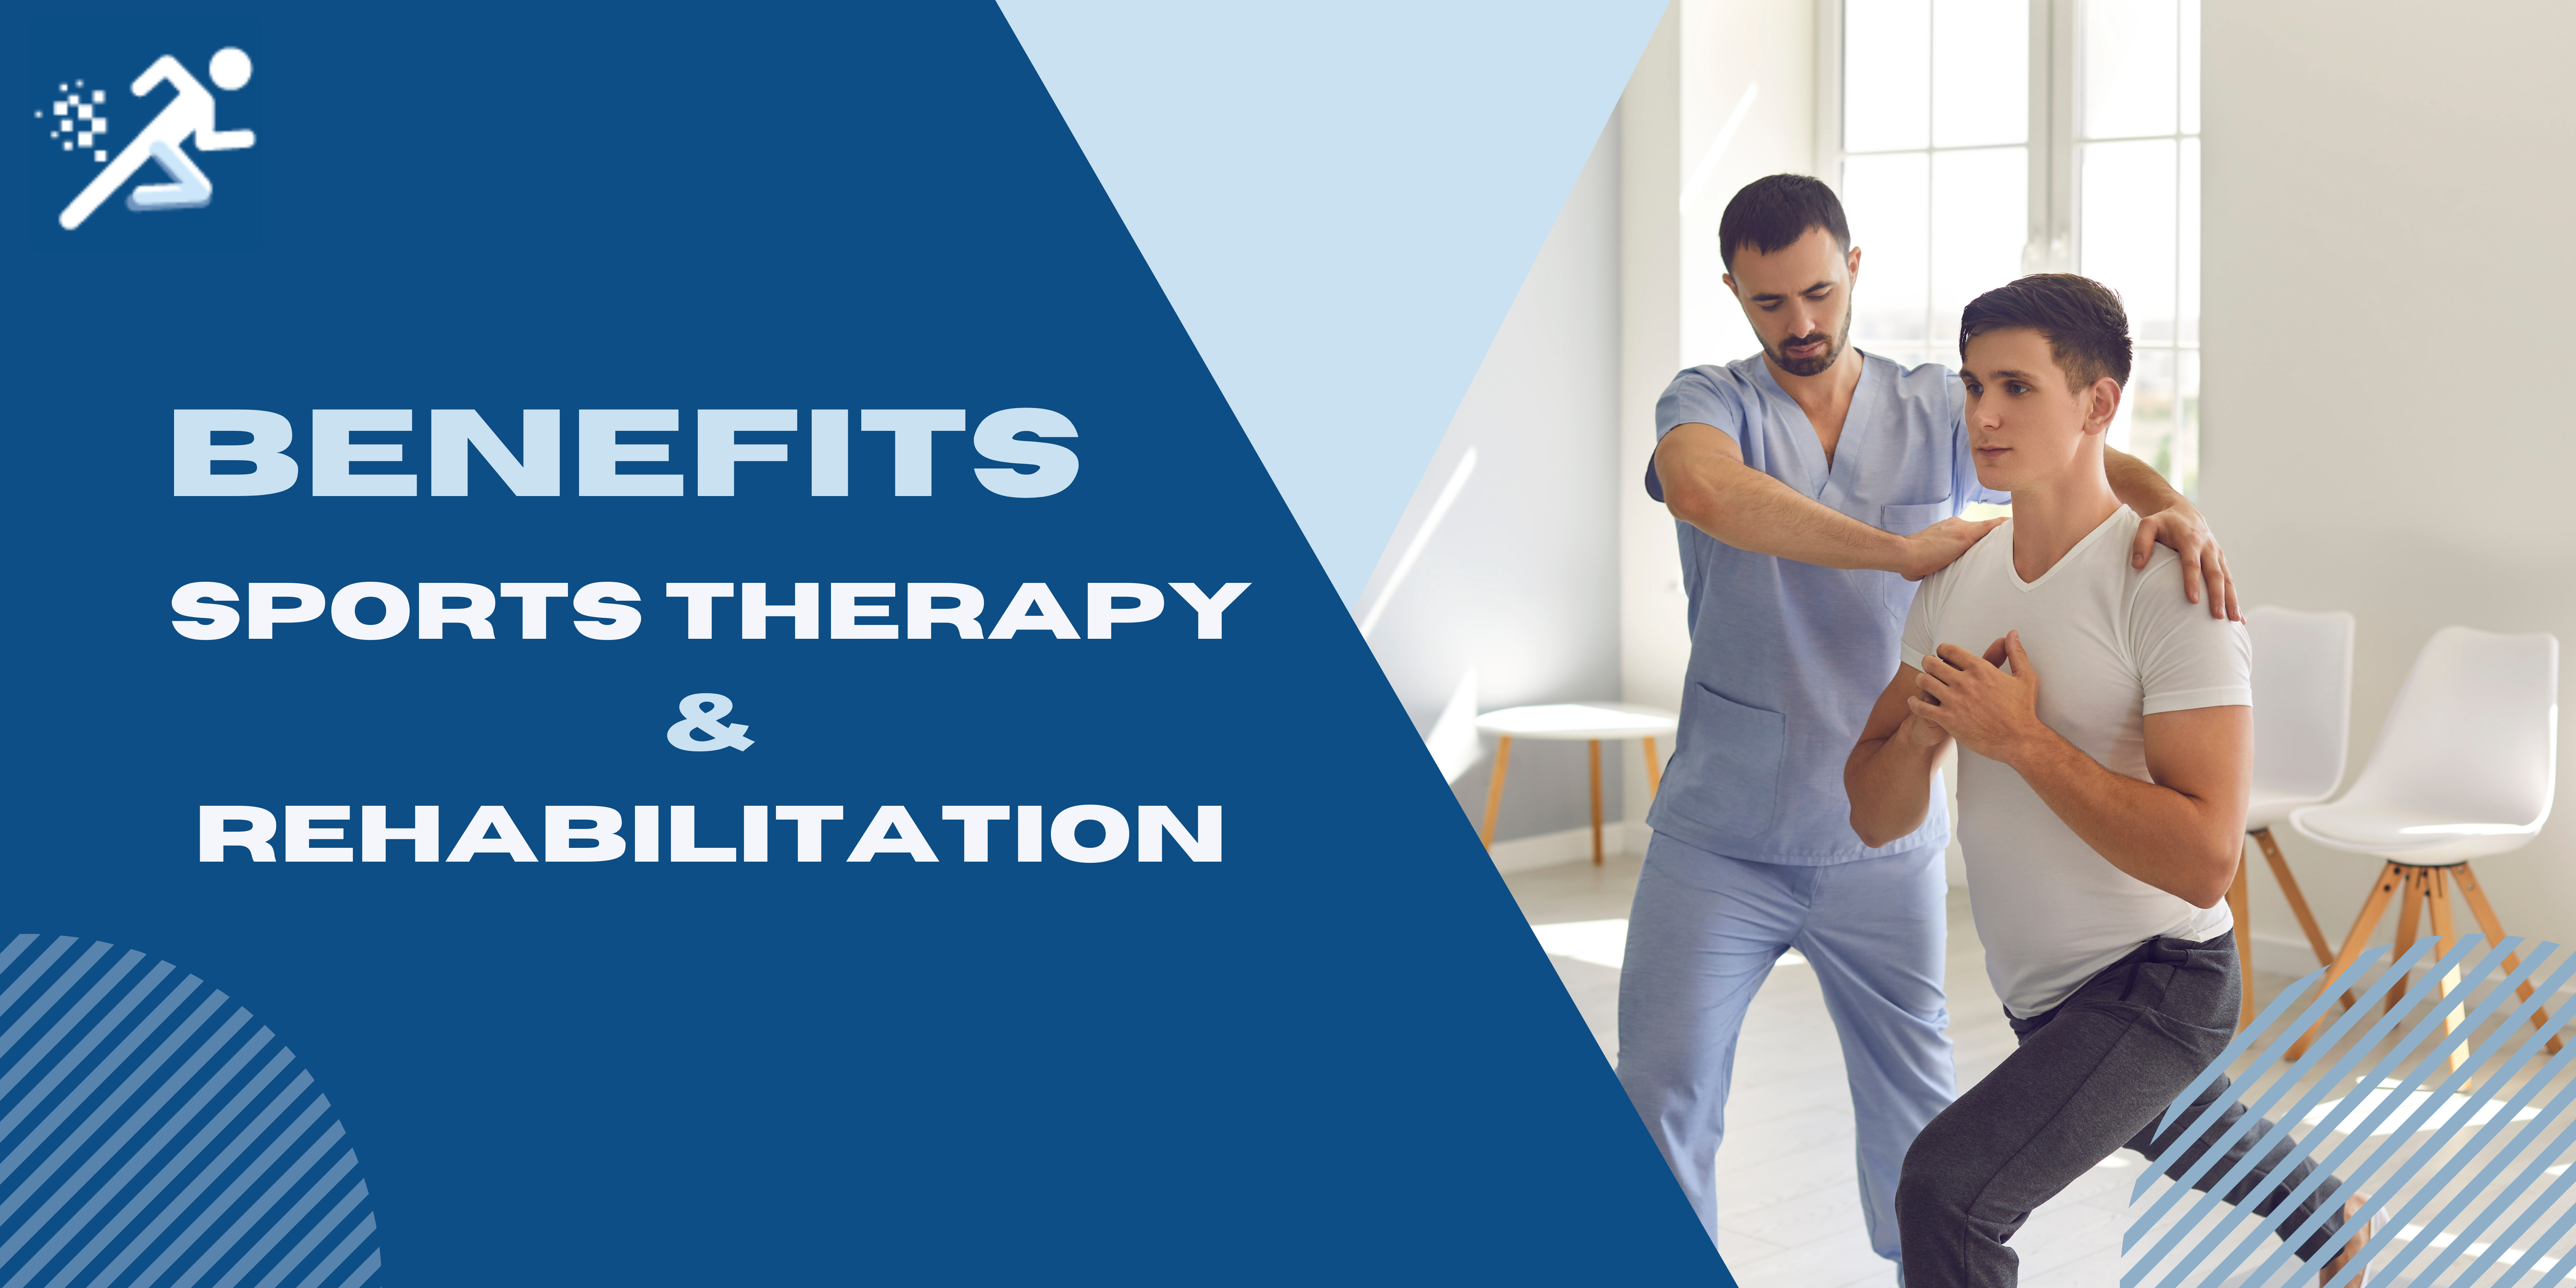 SPORTS THERAPY & Rehabilitation